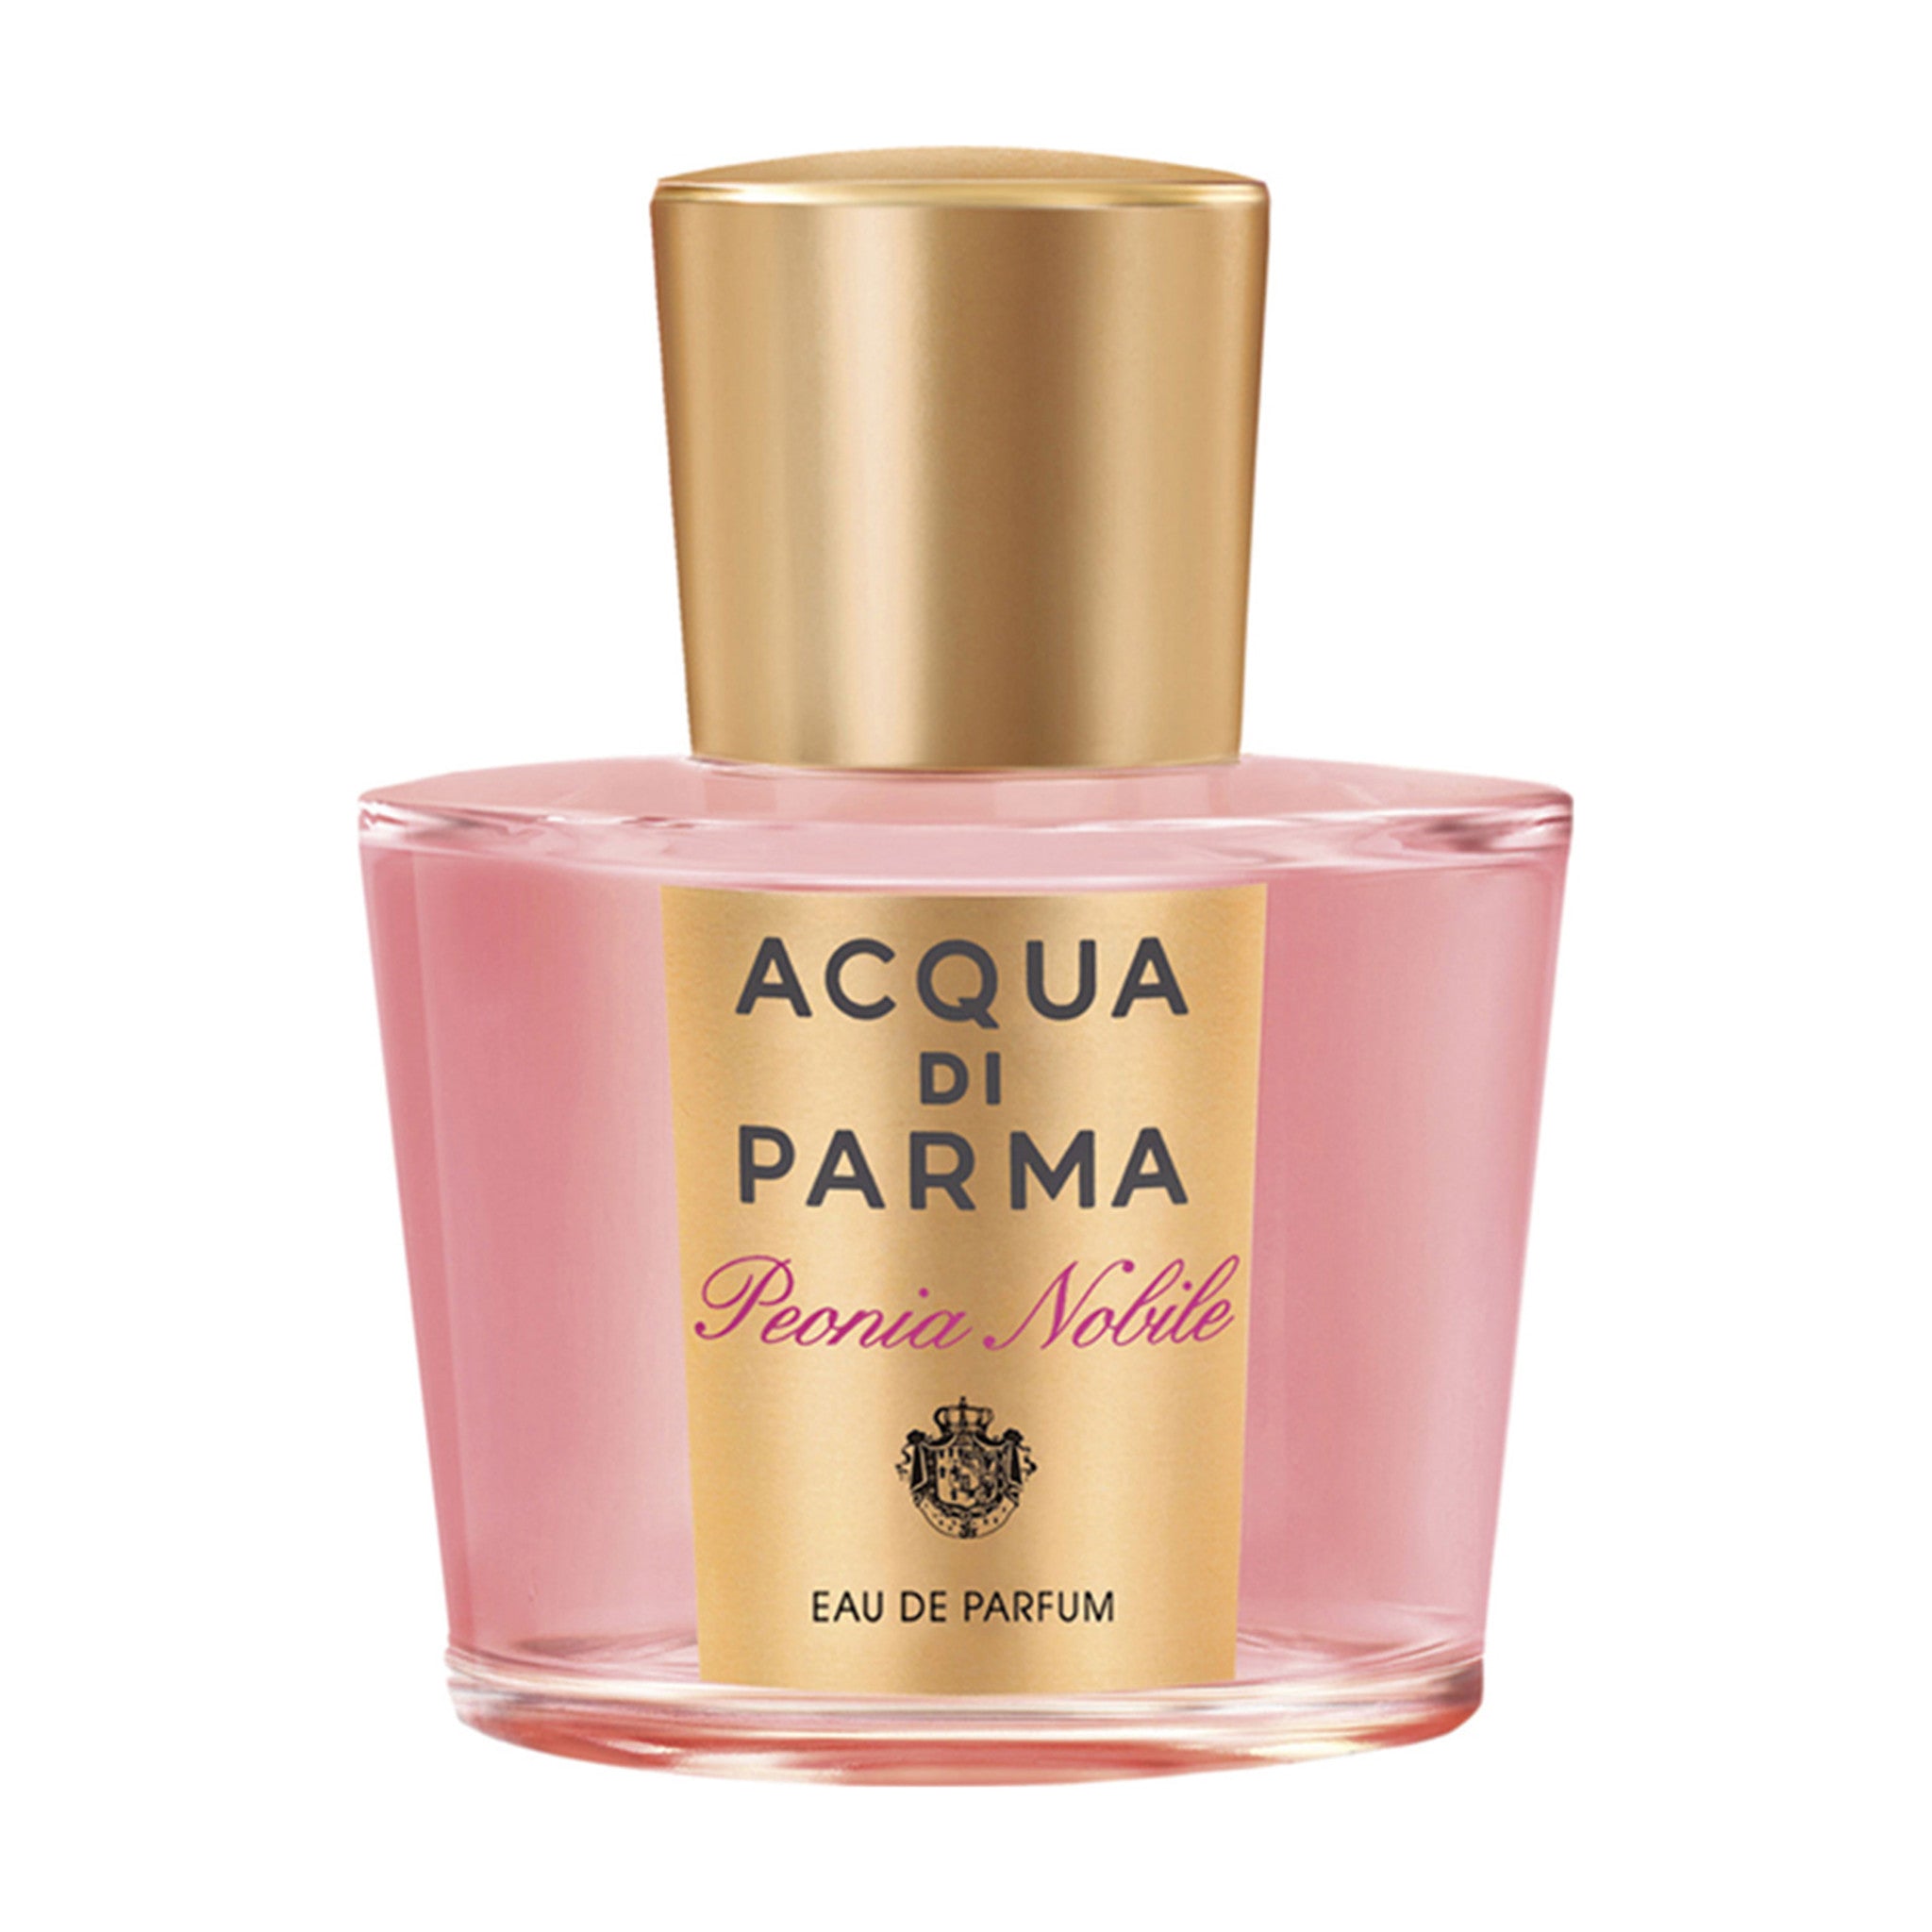 Acqua di Parma Peonia Nobile Eau de Parfum Size variant: 1.7 oz main image.